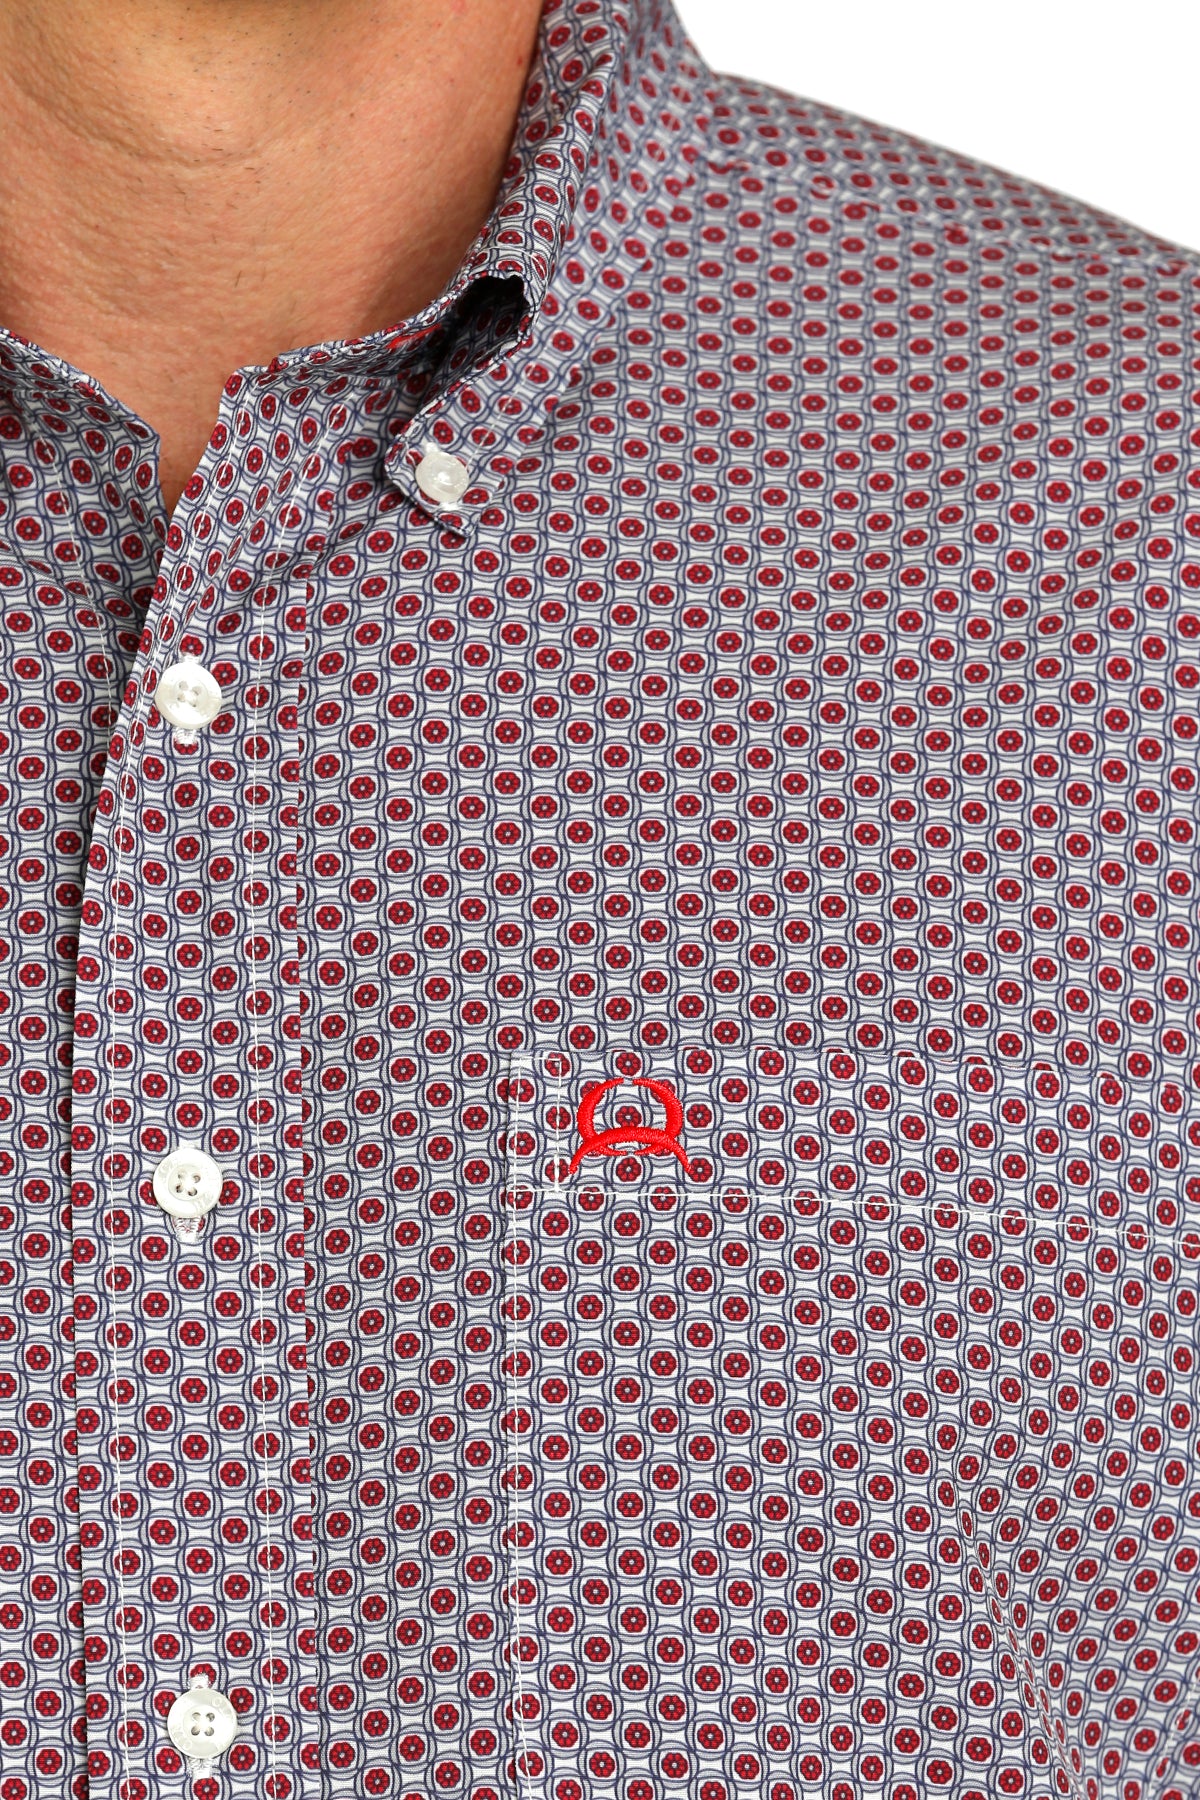 Cinch Men's S/S Arenaflex Geometric Circles Western Button Down Shirt in Grey